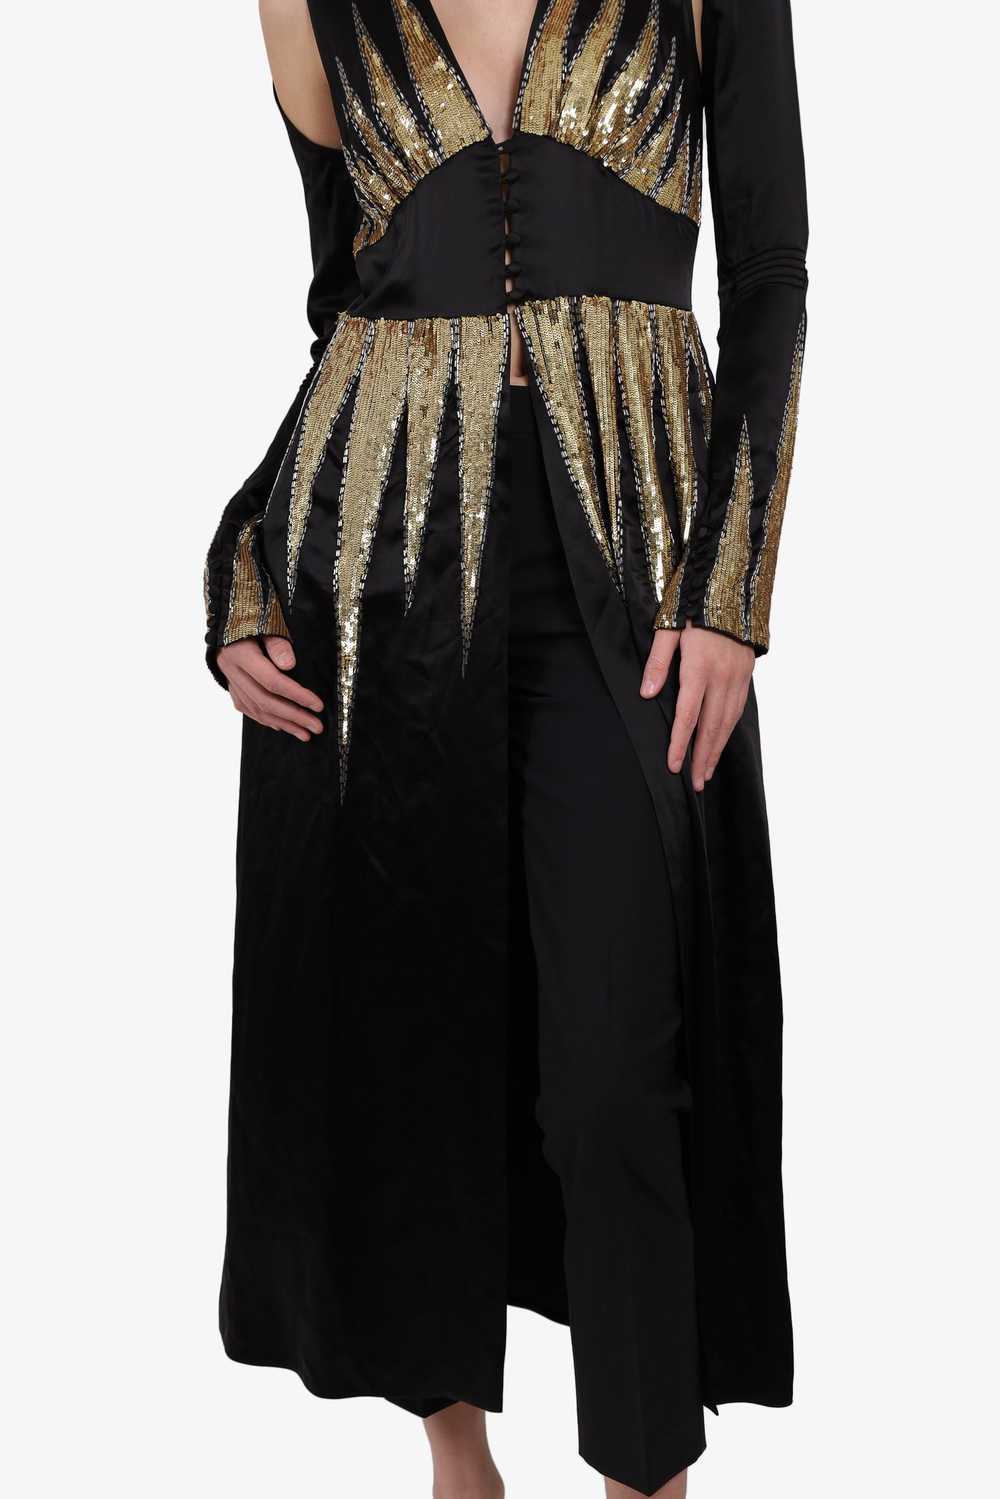 Attico Black Long-sleeve V-Neck Dress with Gold S… - image 6